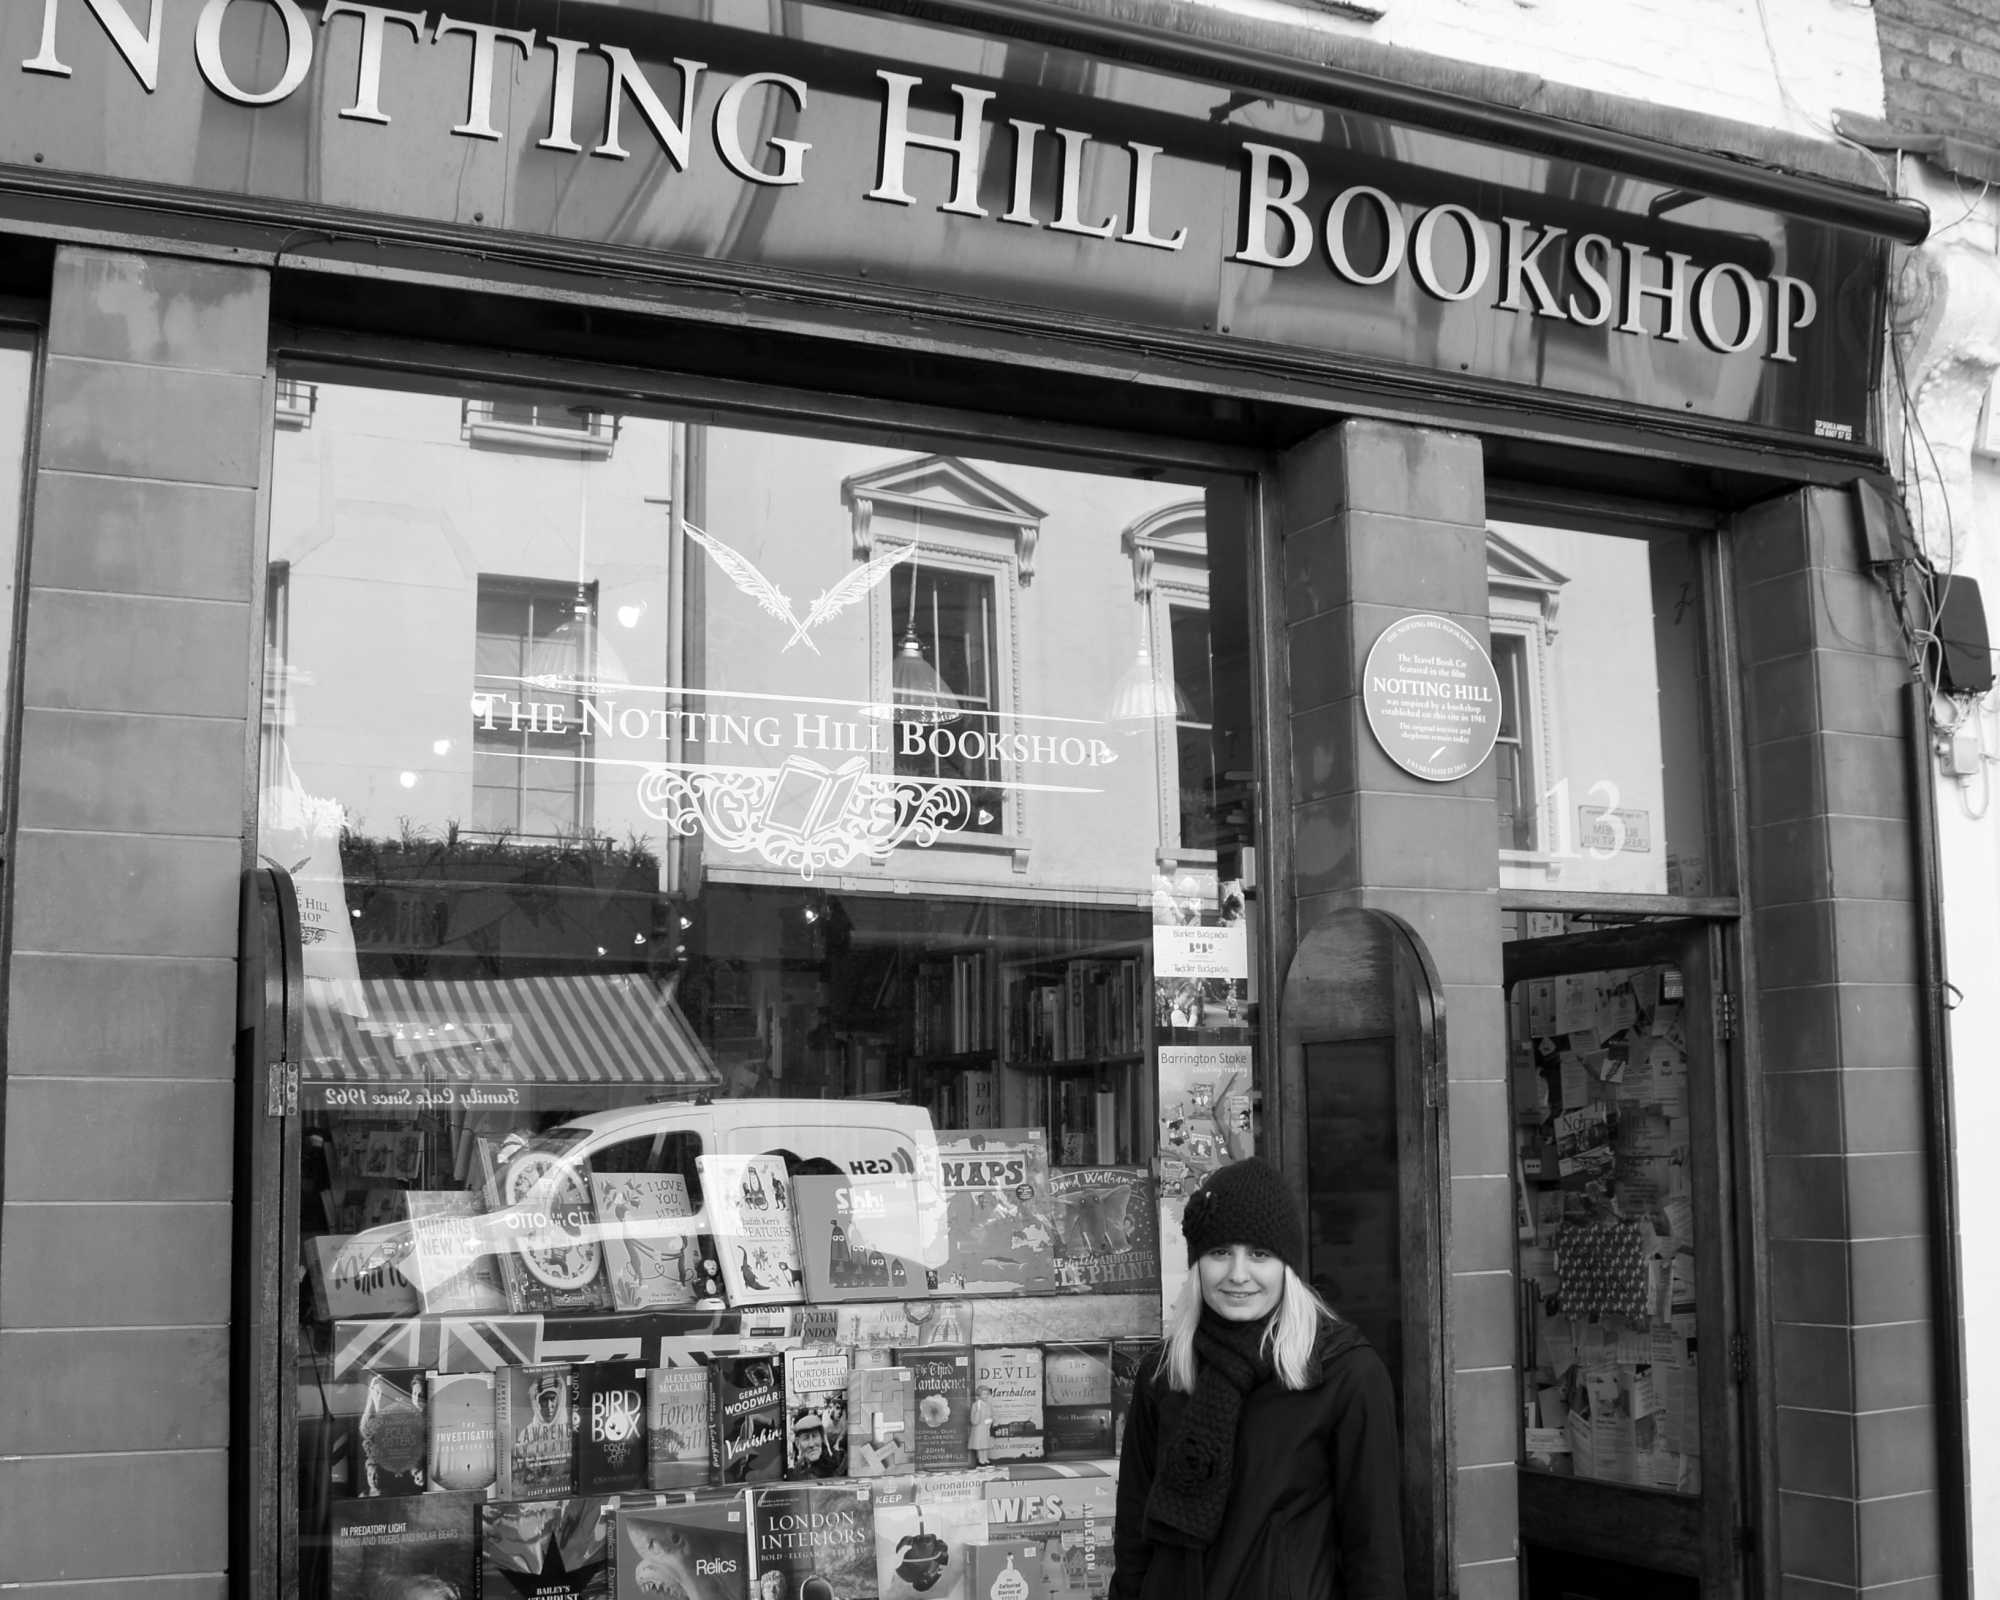 Lisa at Notting Hill Bookshop